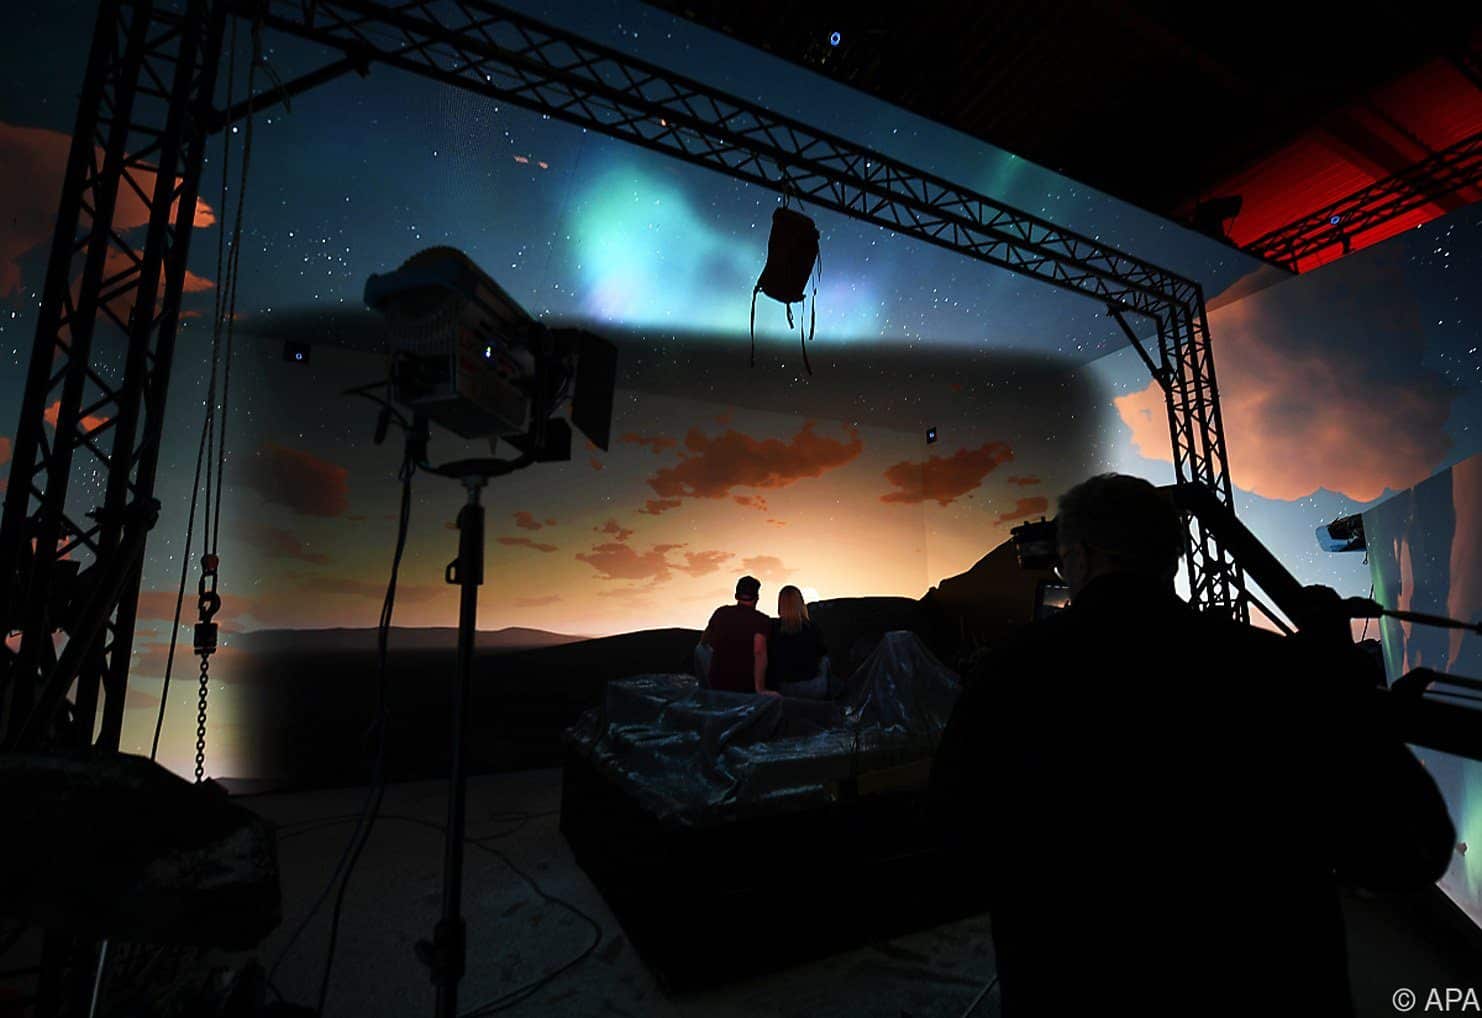 Virtual Production Studio Vienna bietet 270-Grad-Set mit 200 Quadratmeter LED-Fläche